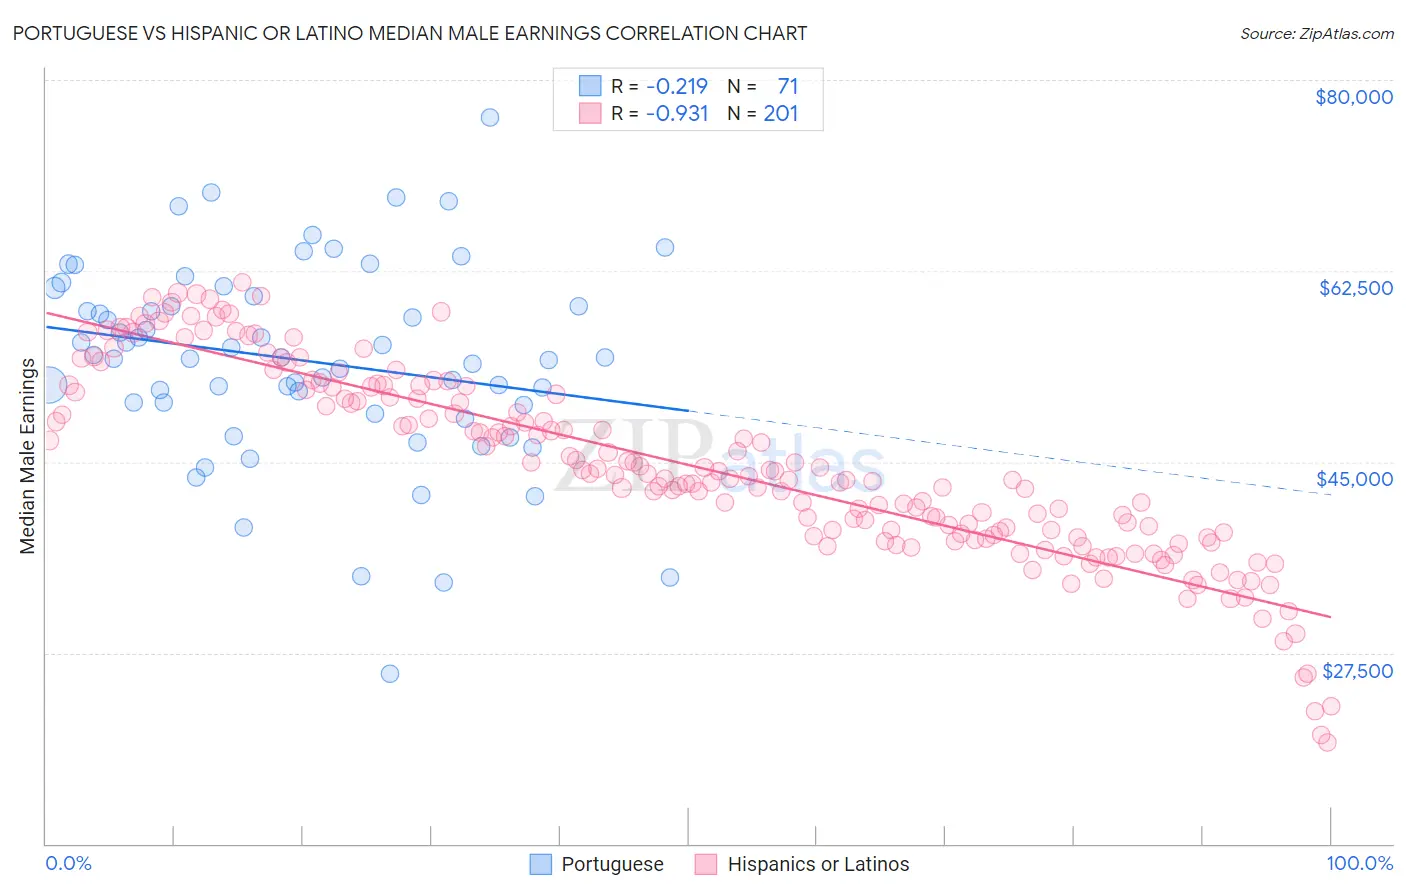 Portuguese vs Hispanic or Latino Median Male Earnings